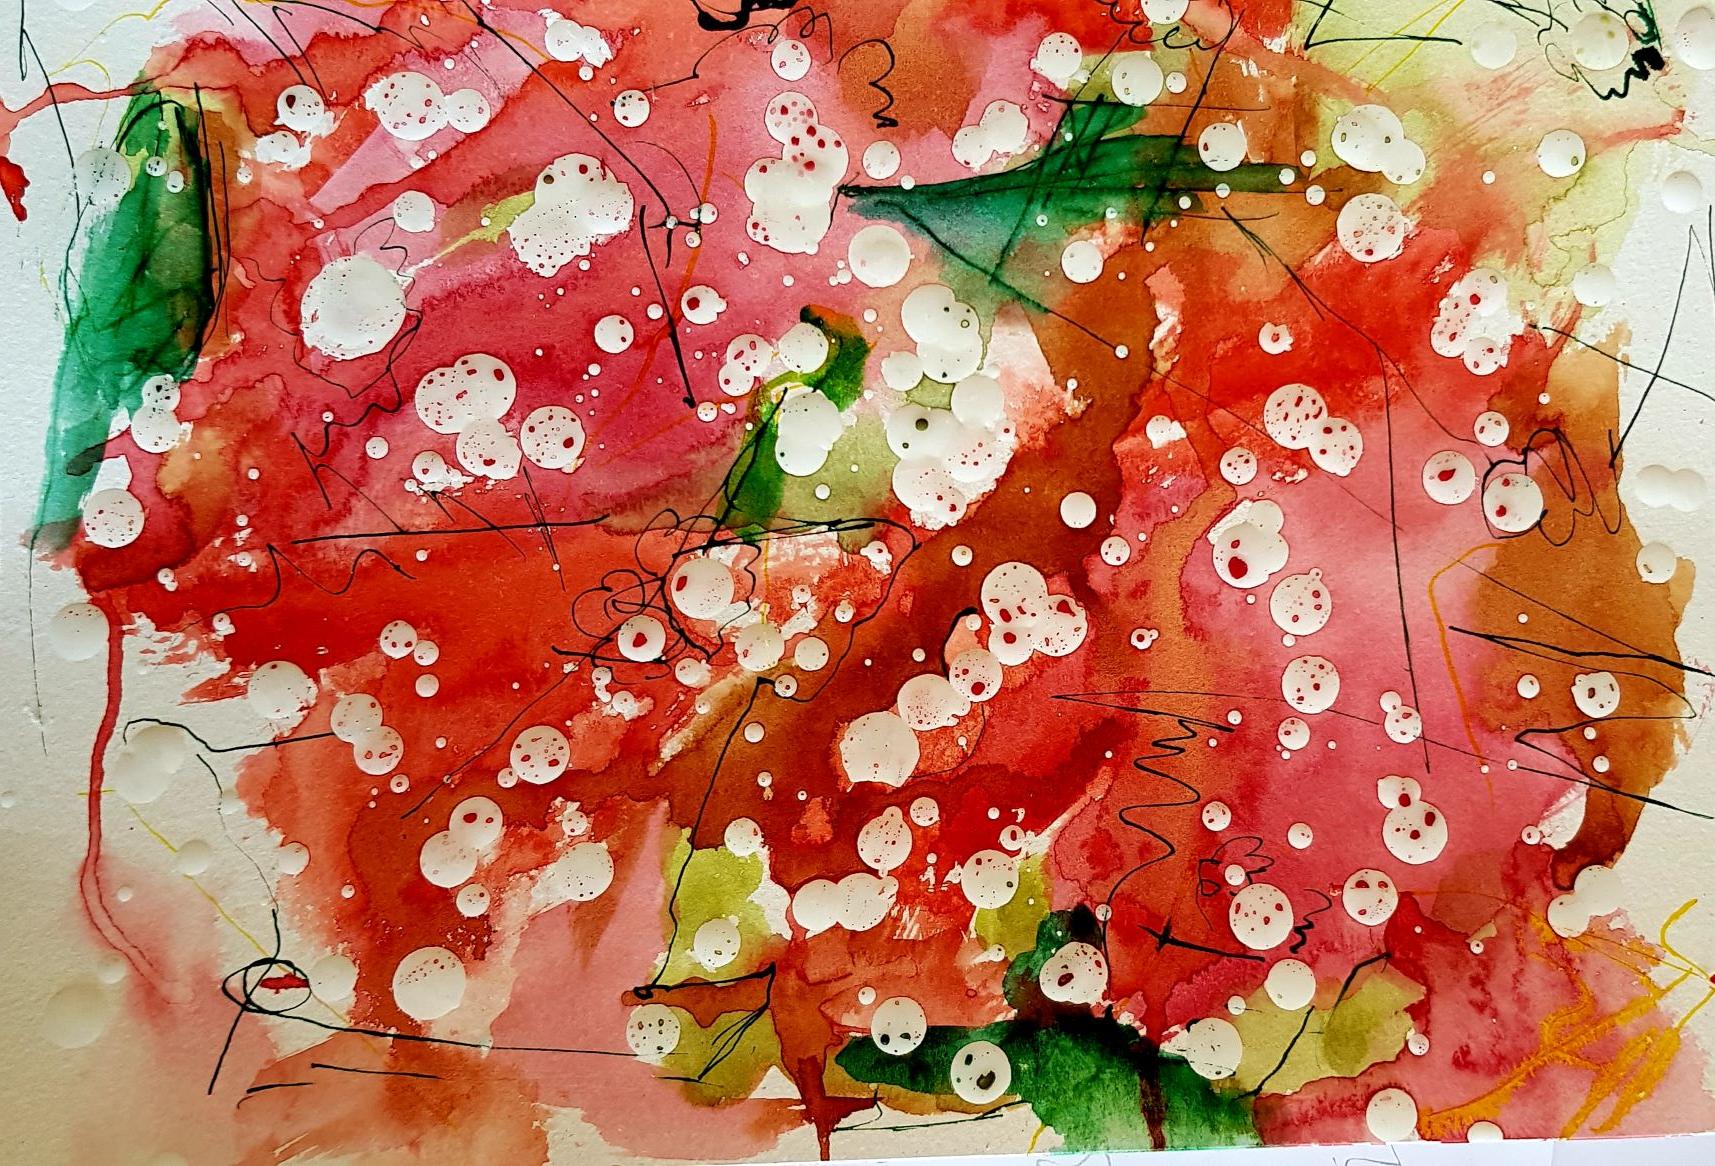 Aquarell, Tusche, Wachs auf Papier / Watercolour, ink, wax on paper 28 x 21 cm/11 x 8,2 inch